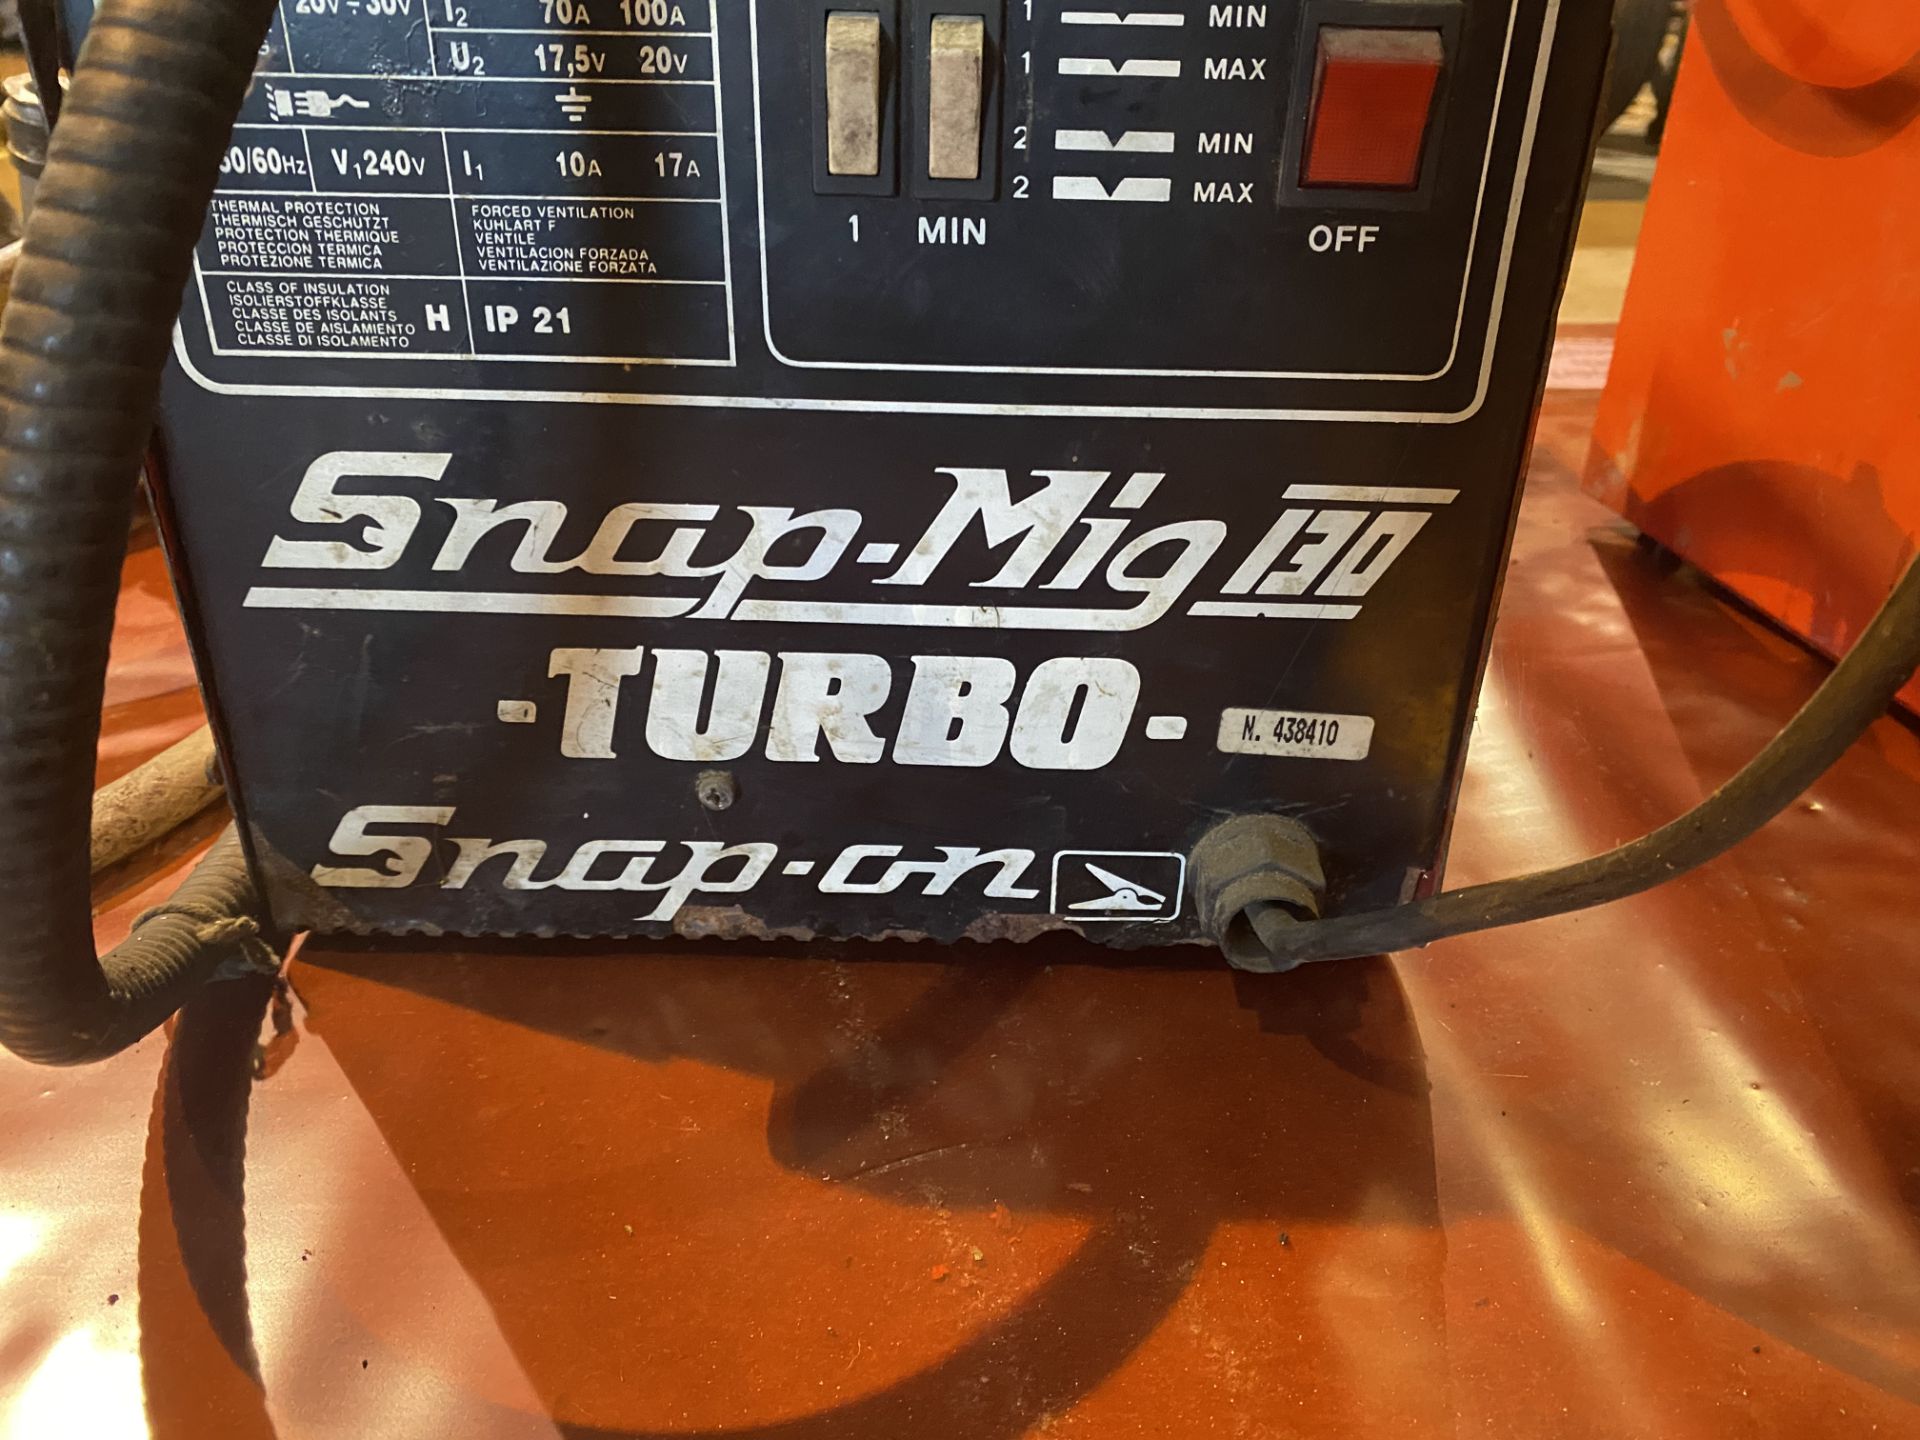 Snap-on Turbo Mig 130 welder - Image 2 of 5